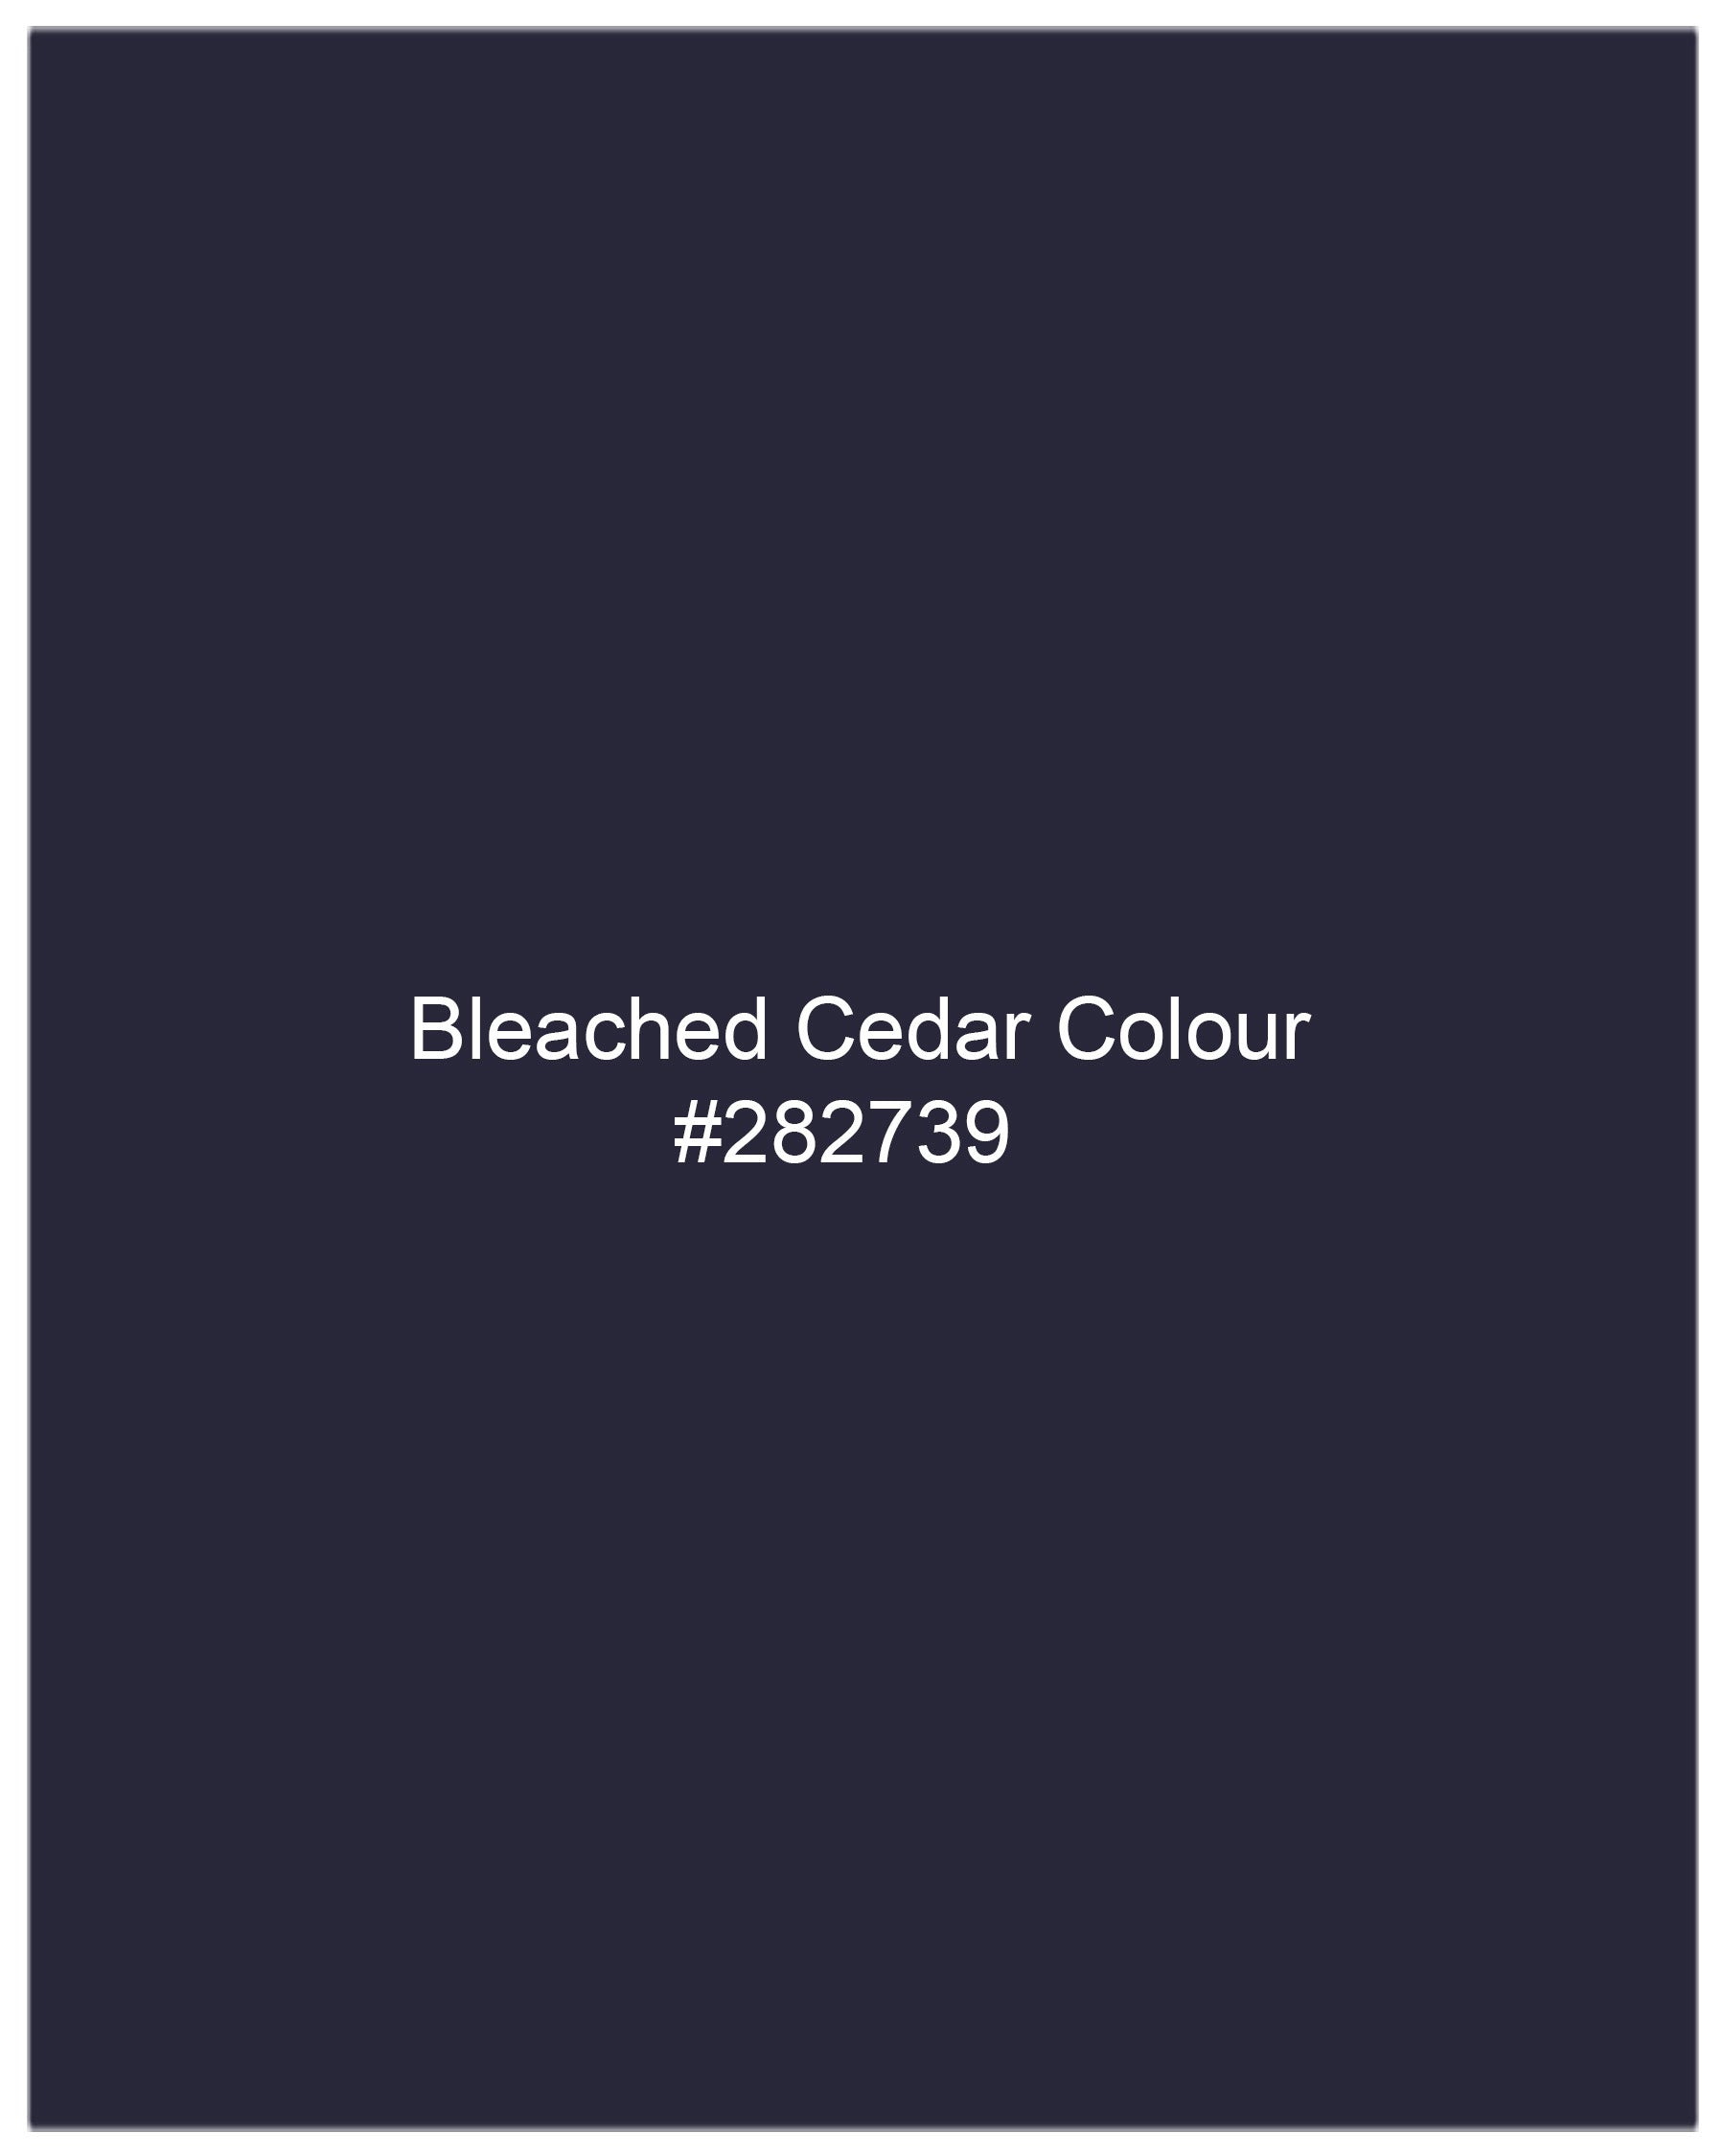 Bleached Cedar Blue Double Breasted Blazer BL2000-DB-36, BL2000-DB-38, BL2000-DB-40, BL2000-DB-42, BL2000-DB-44, BL2000-DB-46, BL2000-DB-48, BL2000-DB-50, BL2000-DB-52, BL2000-DB-54, BL2000-DB-56, BL2000-DB-58, BL2000-DB-60